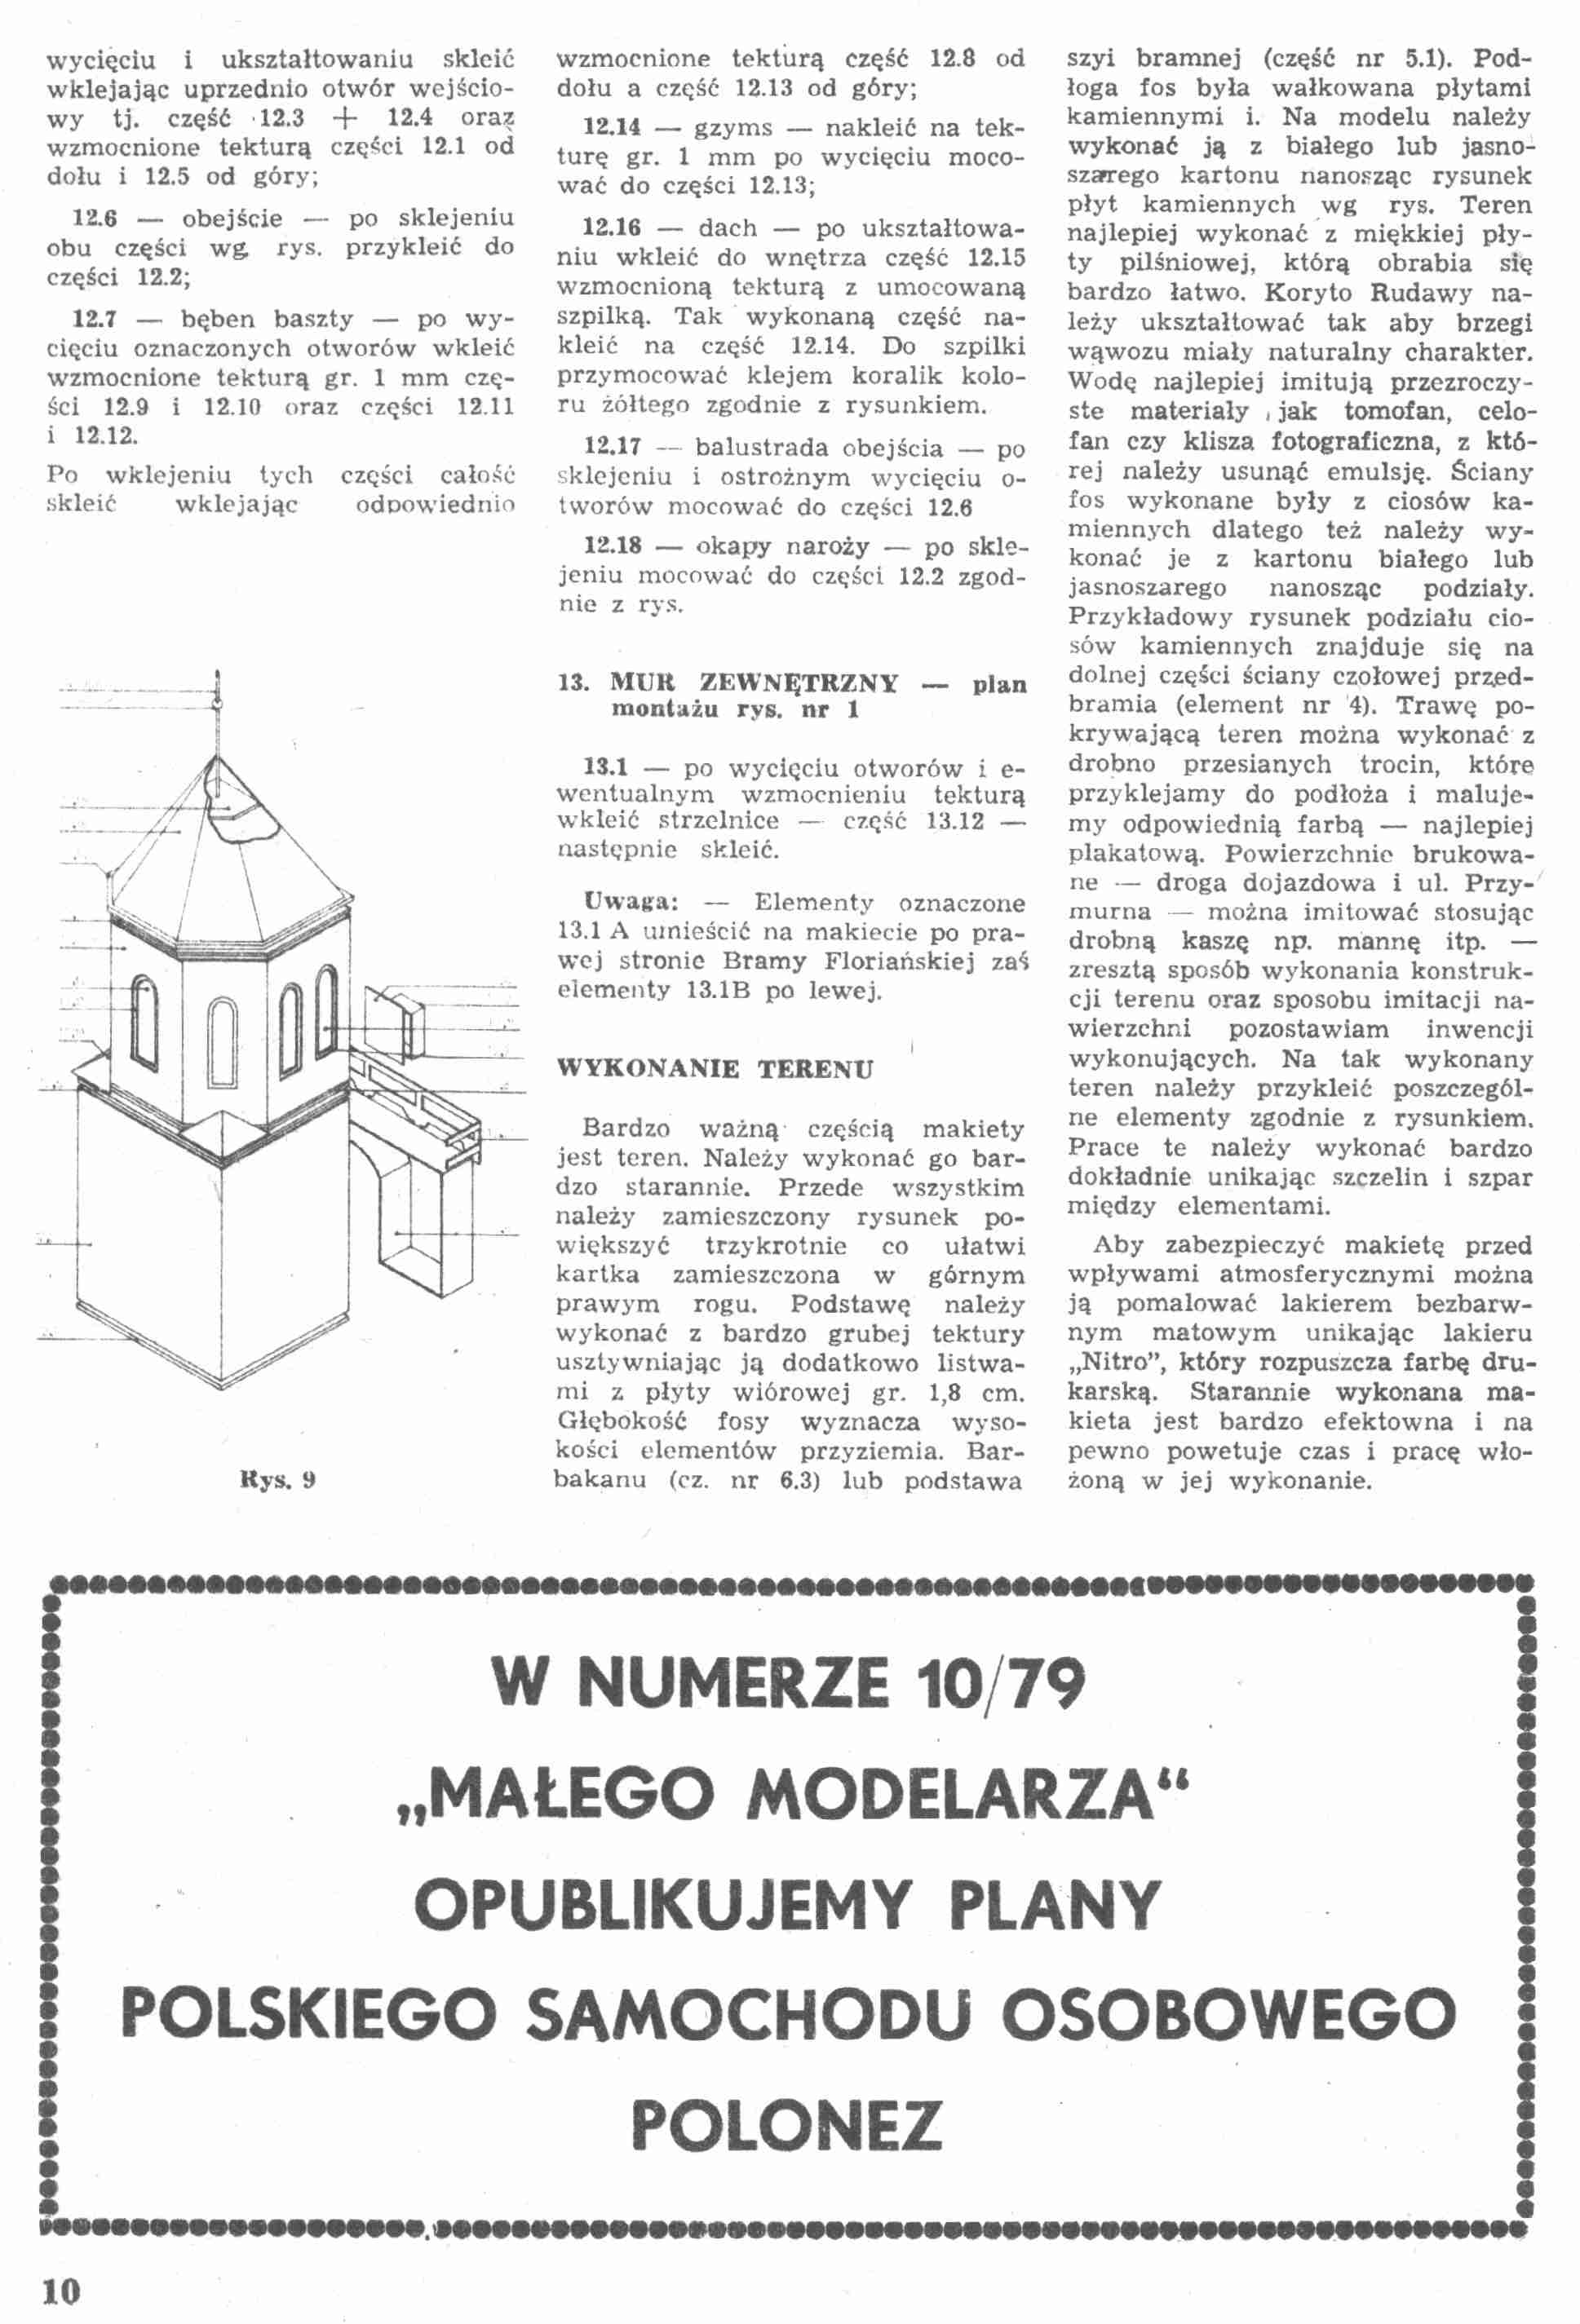 "Maly Modelarz" 8-9, 1979, 10 с.